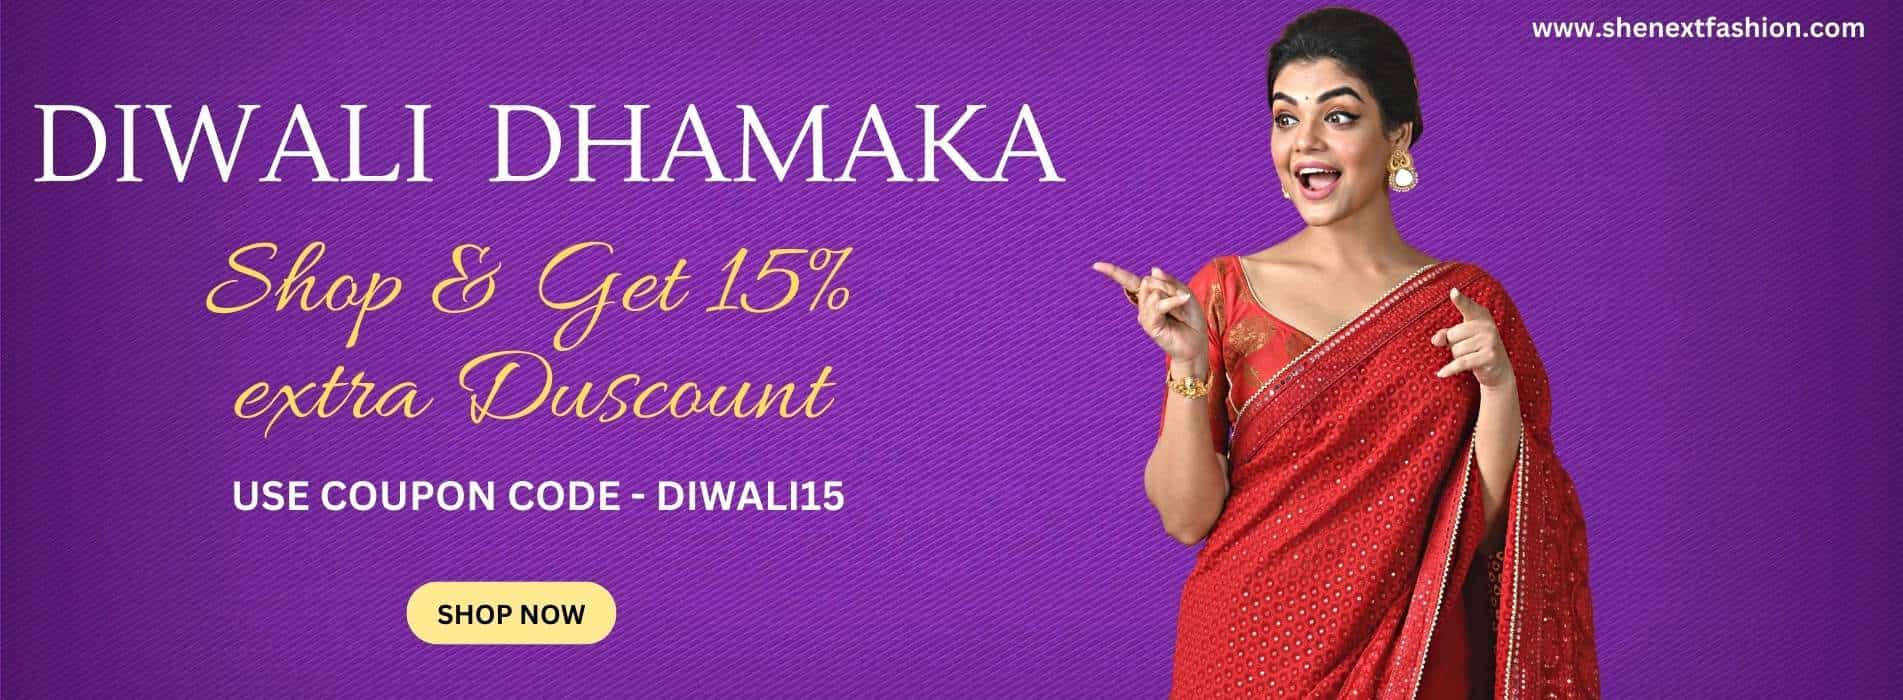 diwali-discount-offer